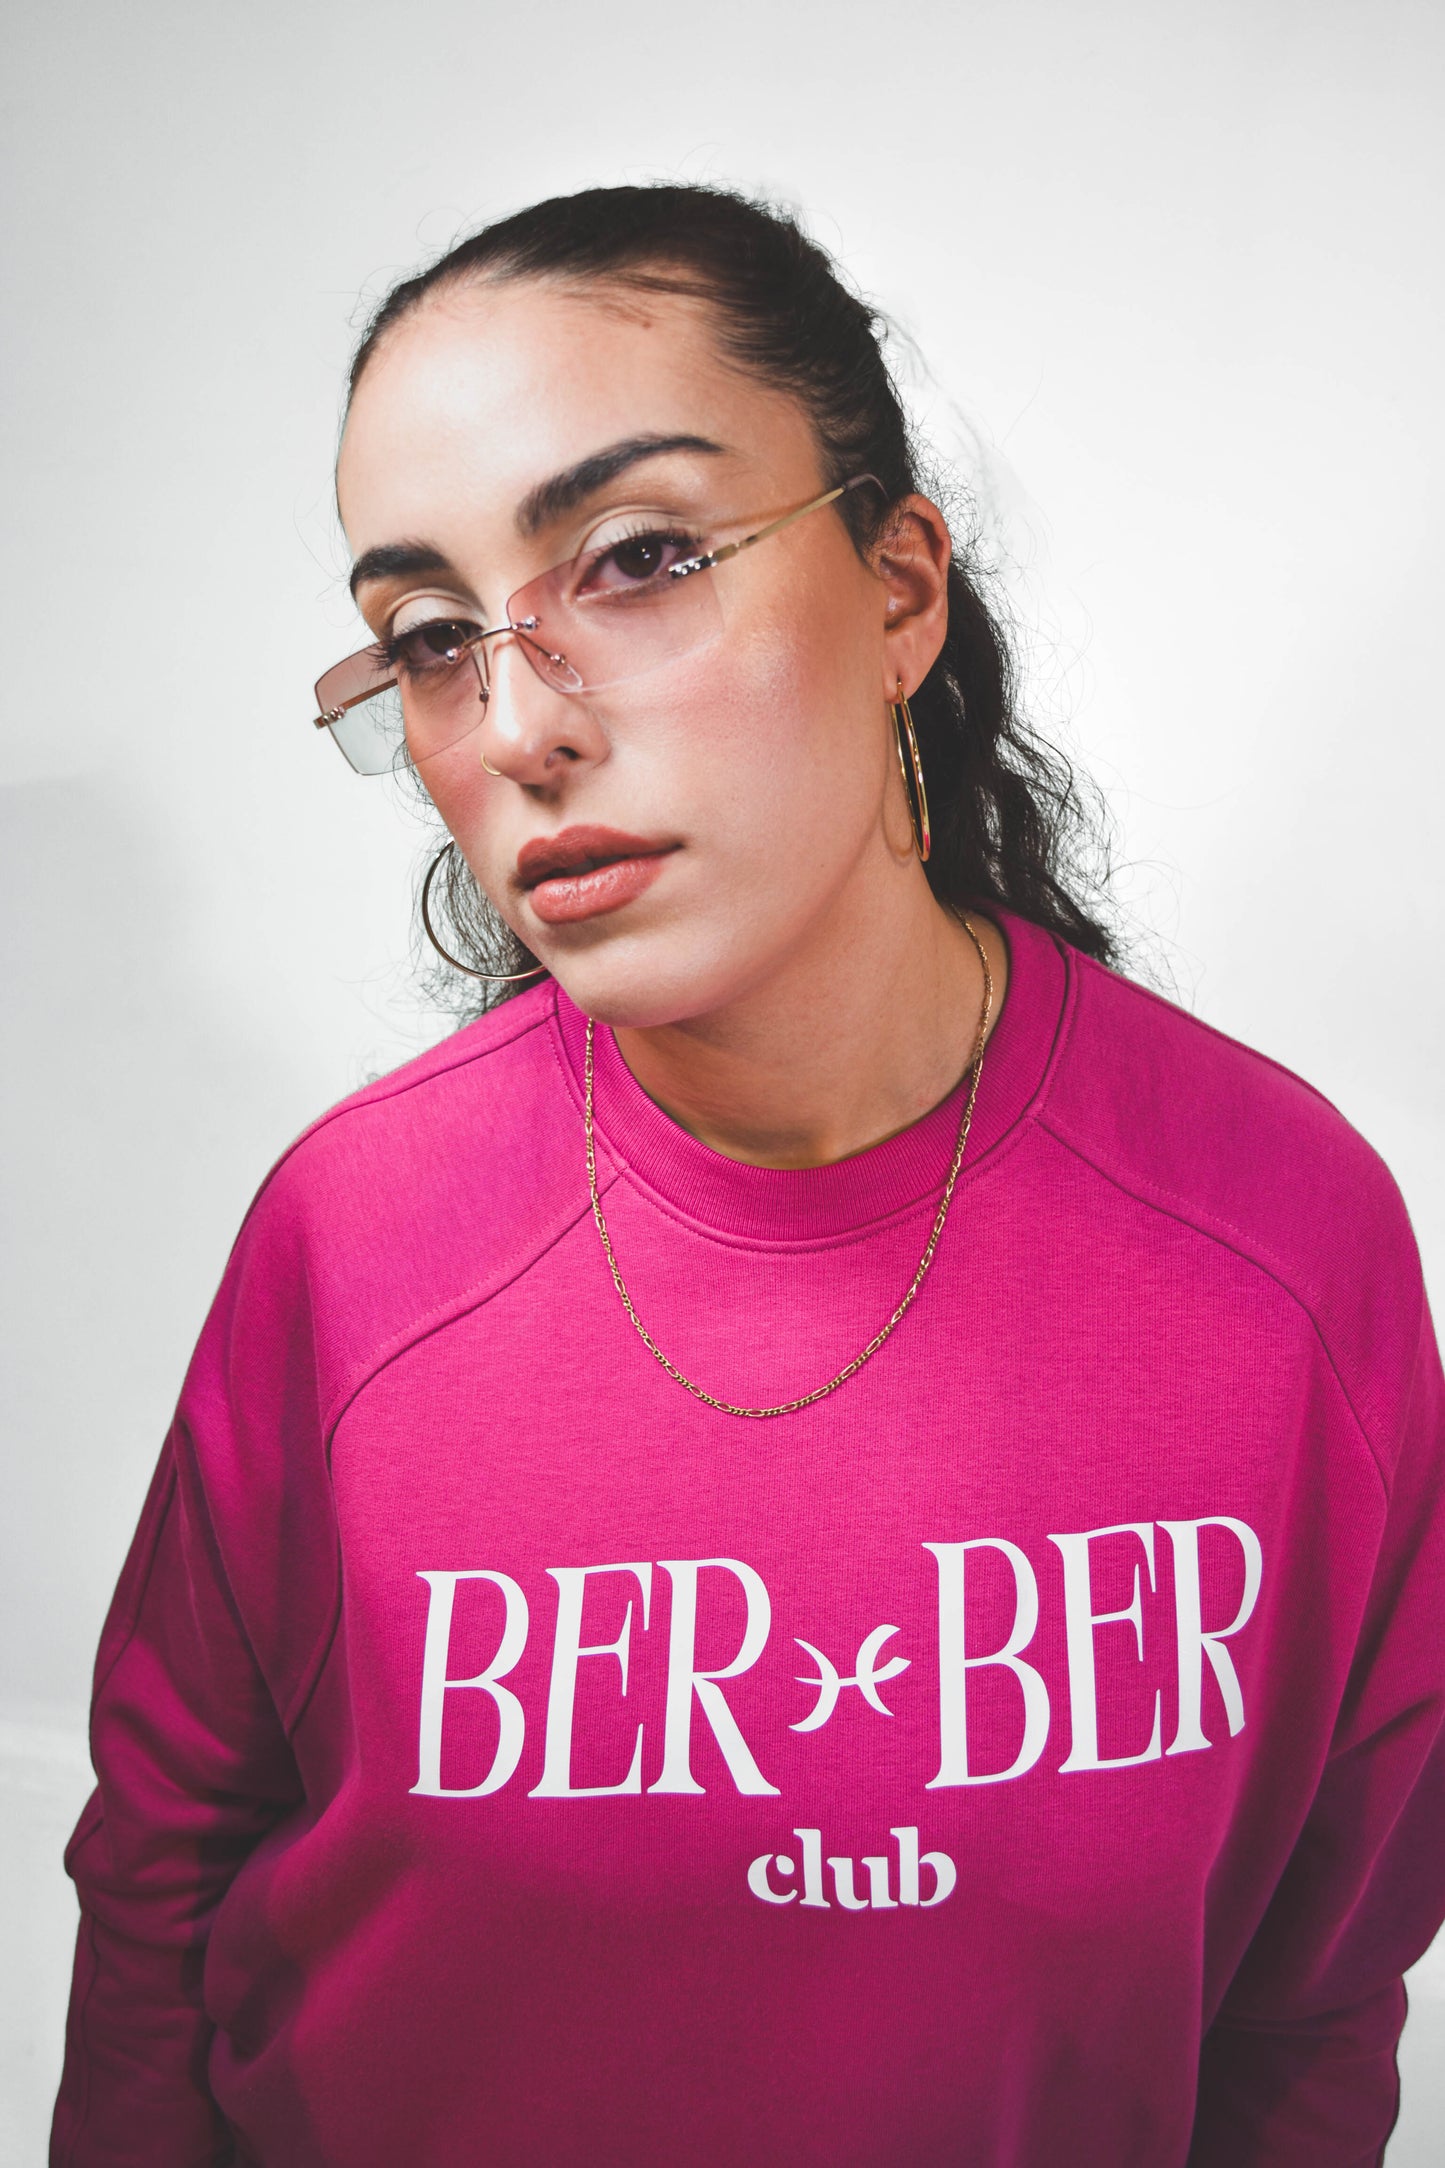 Sweat-shirt long en coton biologique - Berber club